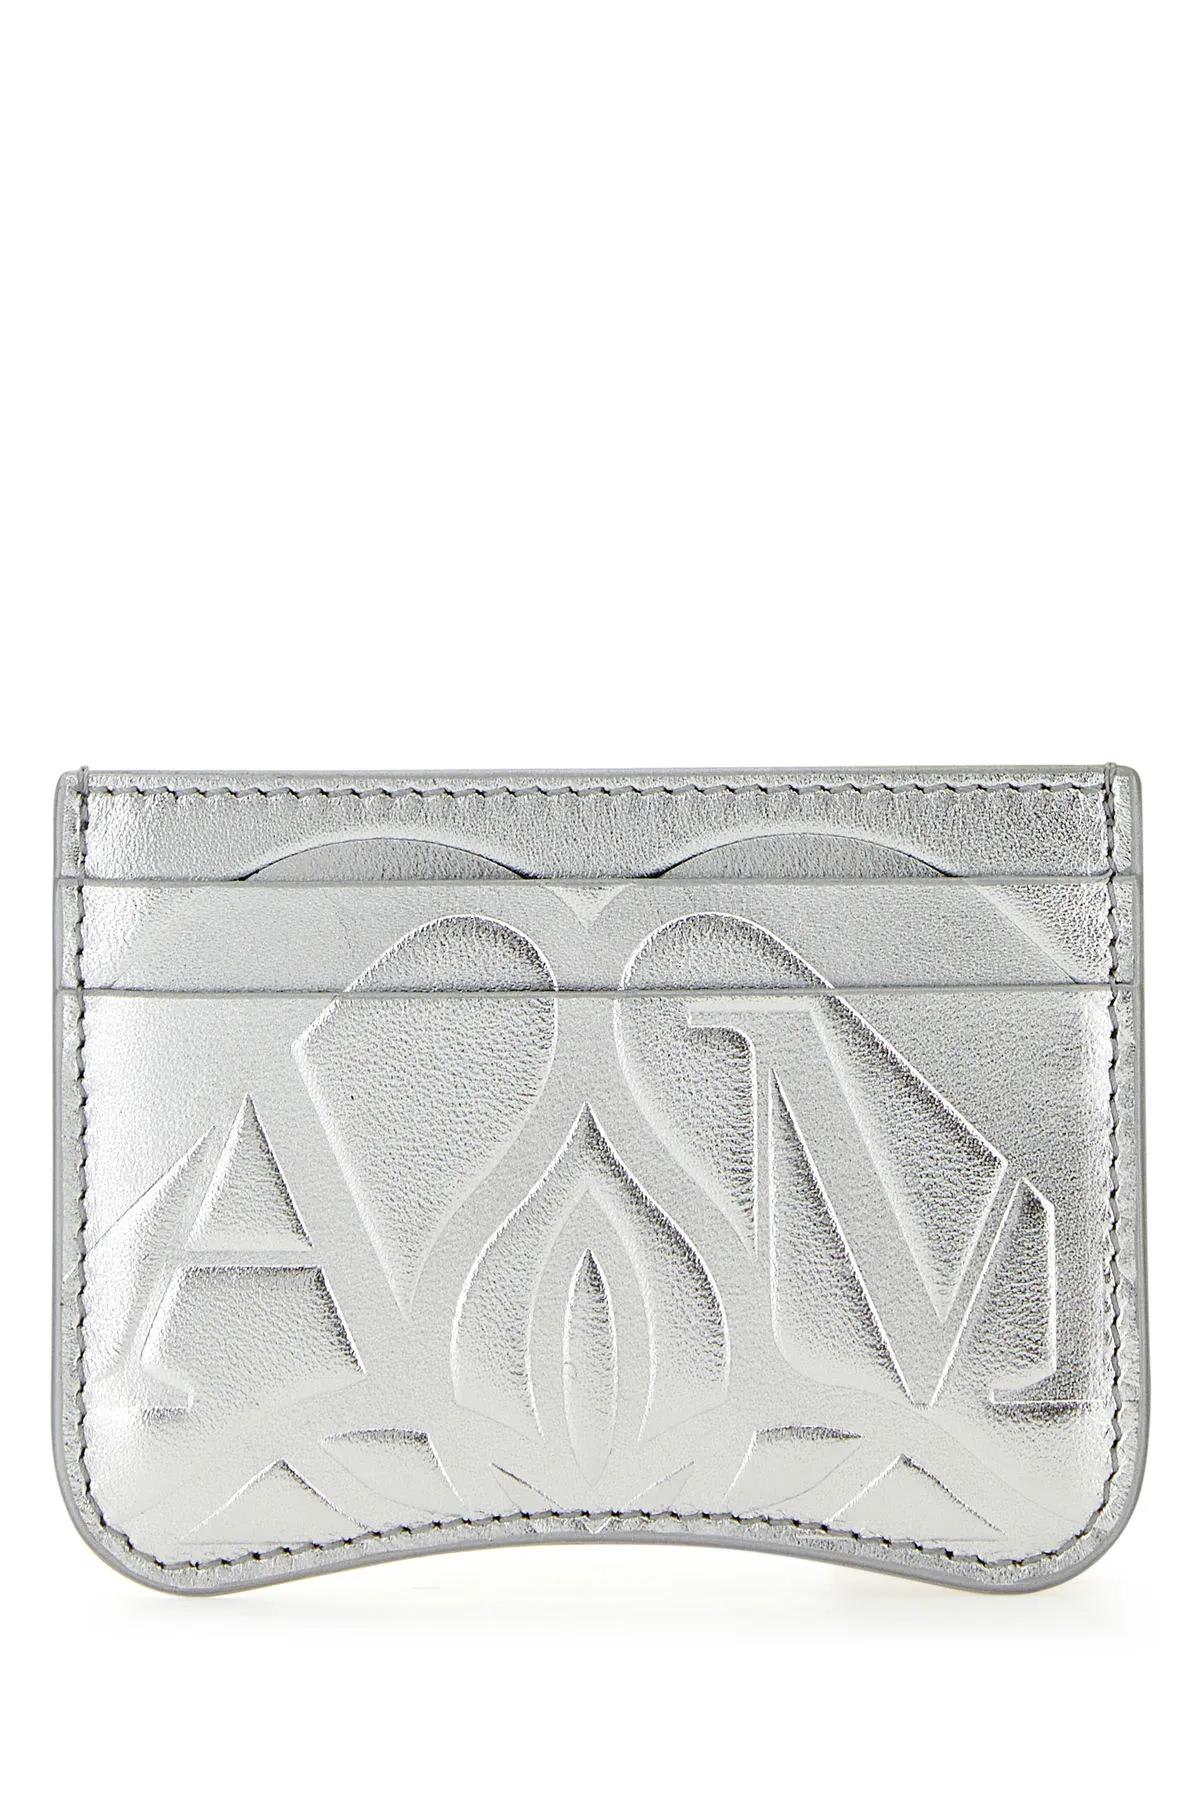 Alexander Mcqueen Silver Leather Card Holder In Metallic